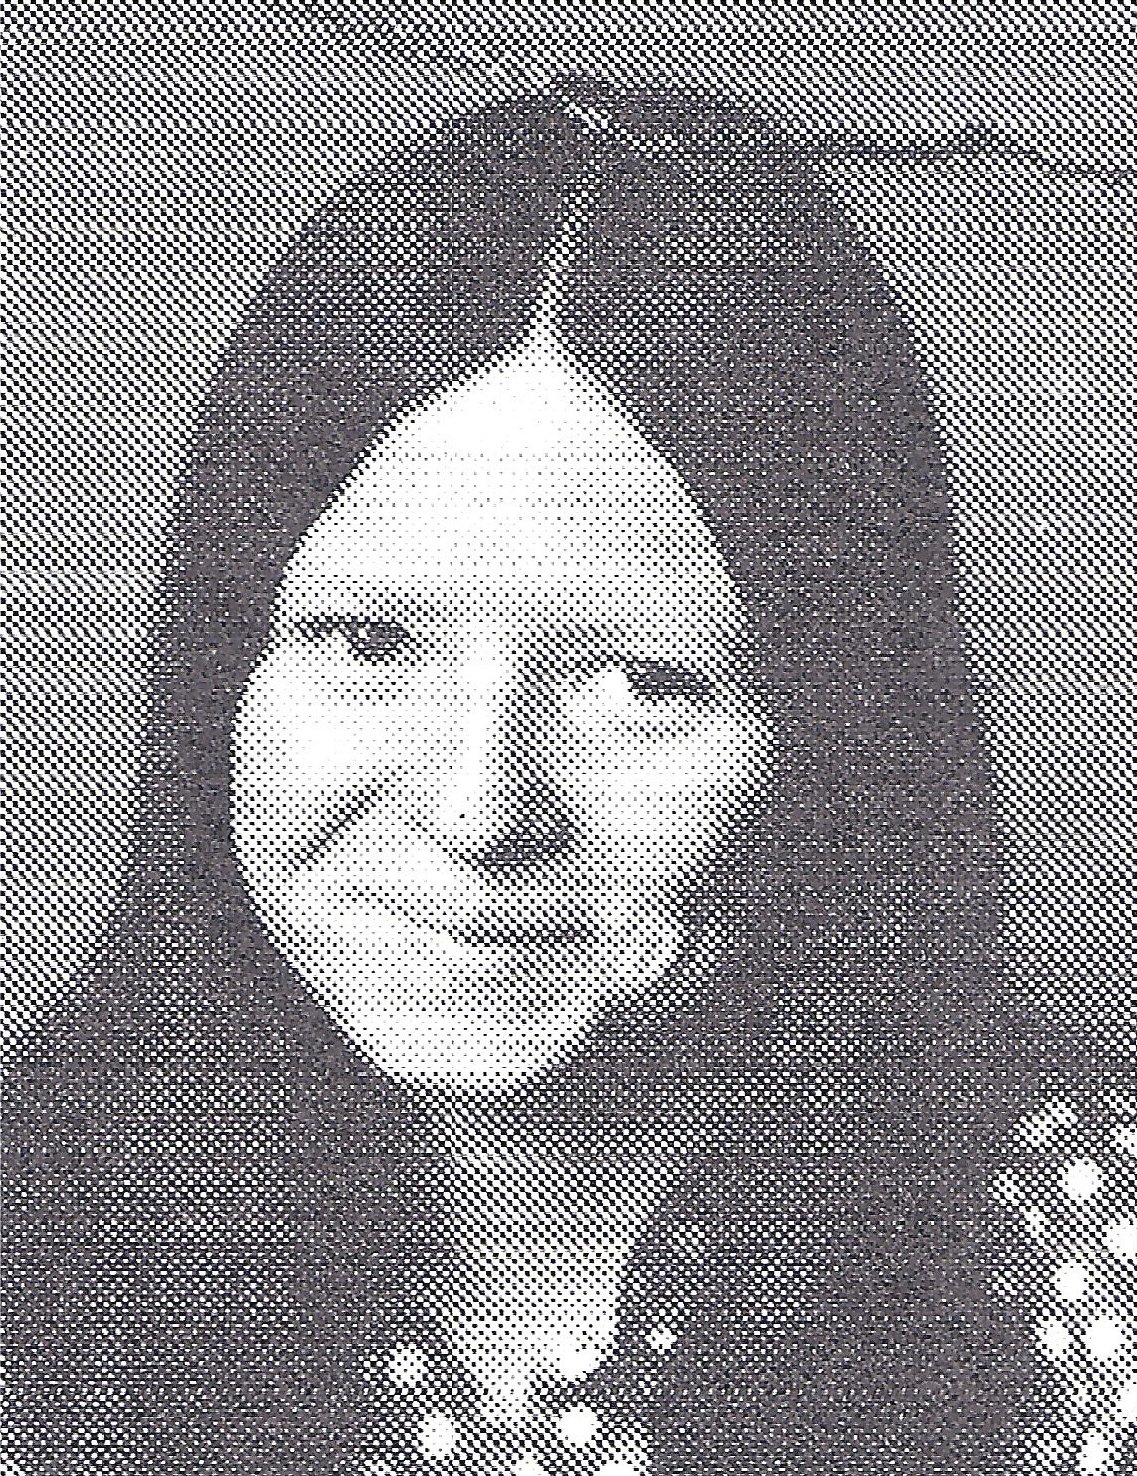 Debra Elaine (Fitchpatrick) Head